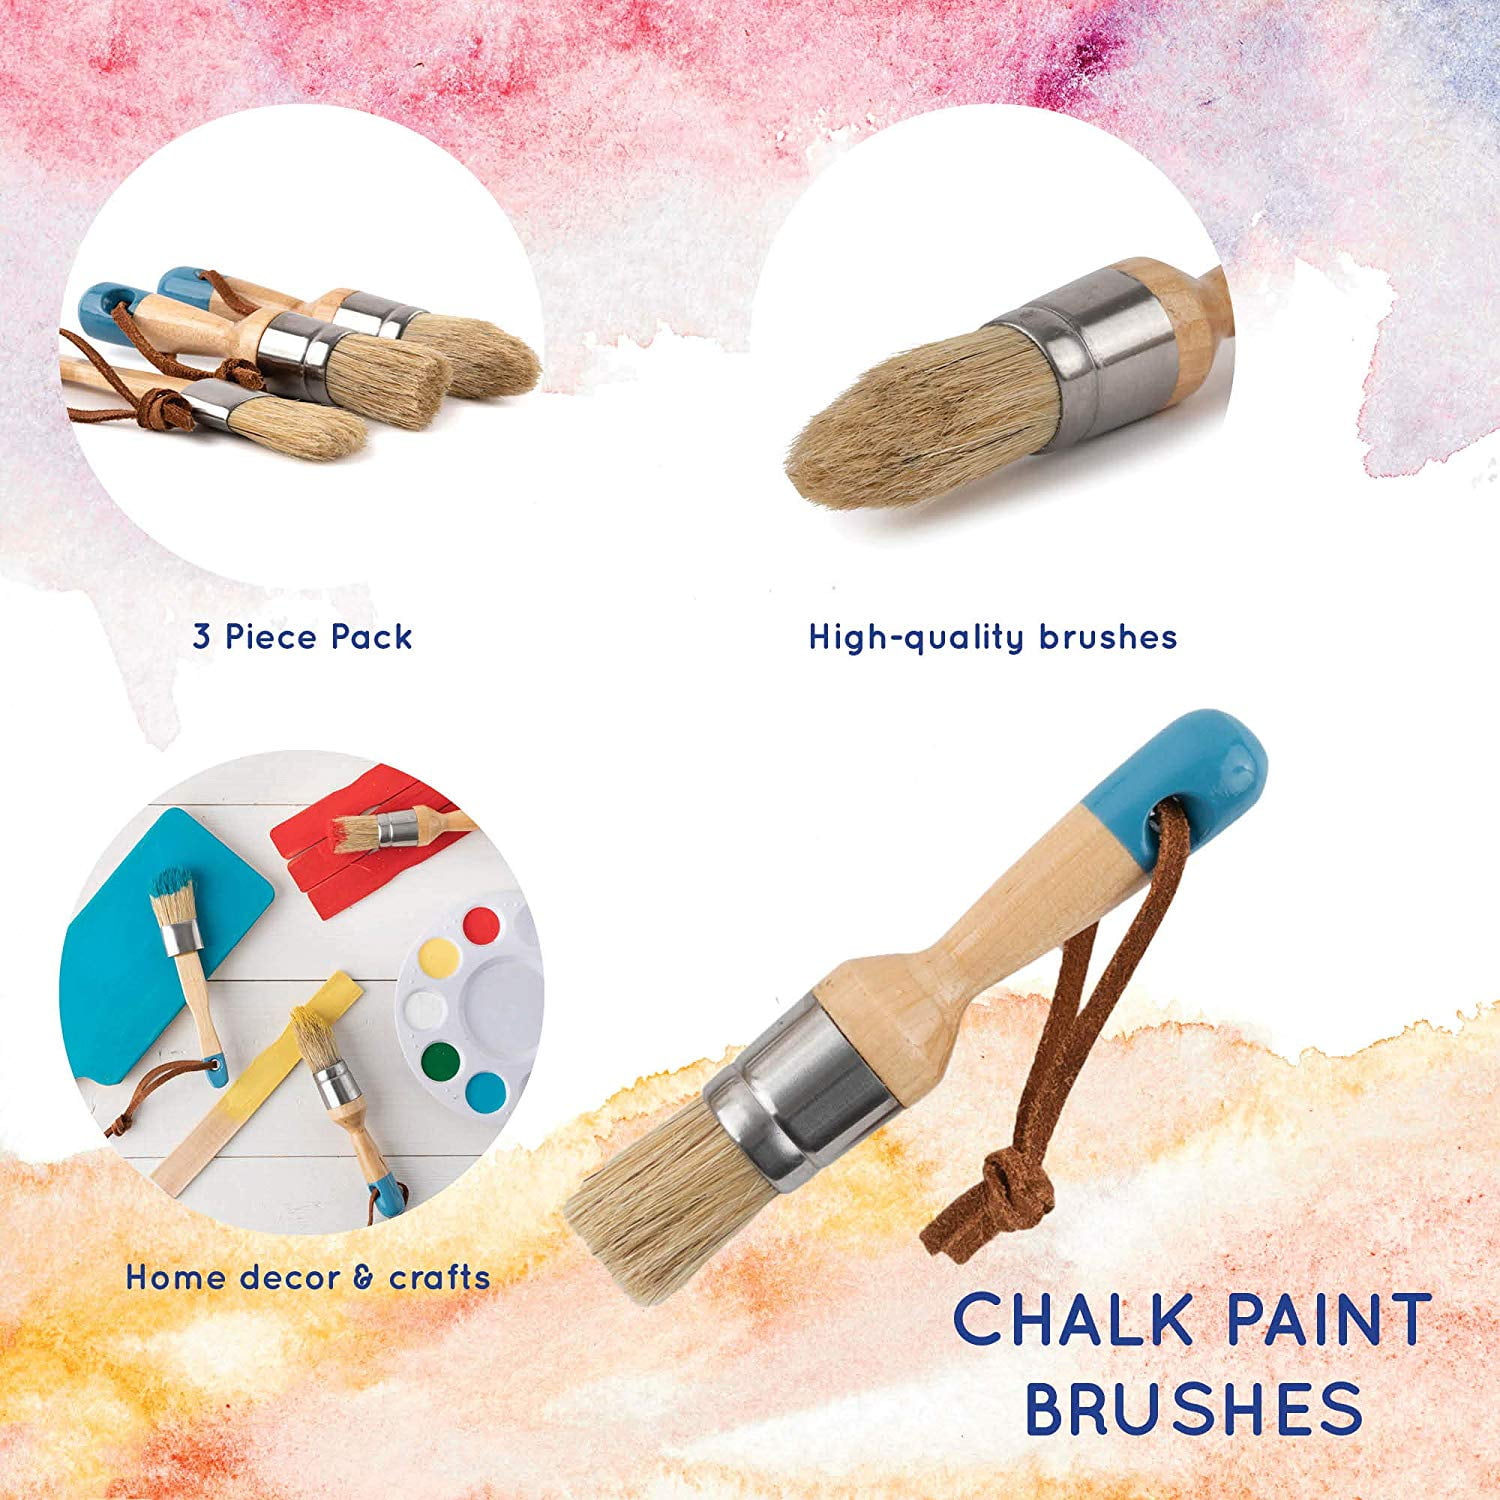 Pixiss Wax & Chalk Brush Set 2 Pack — Grand River Art Supply